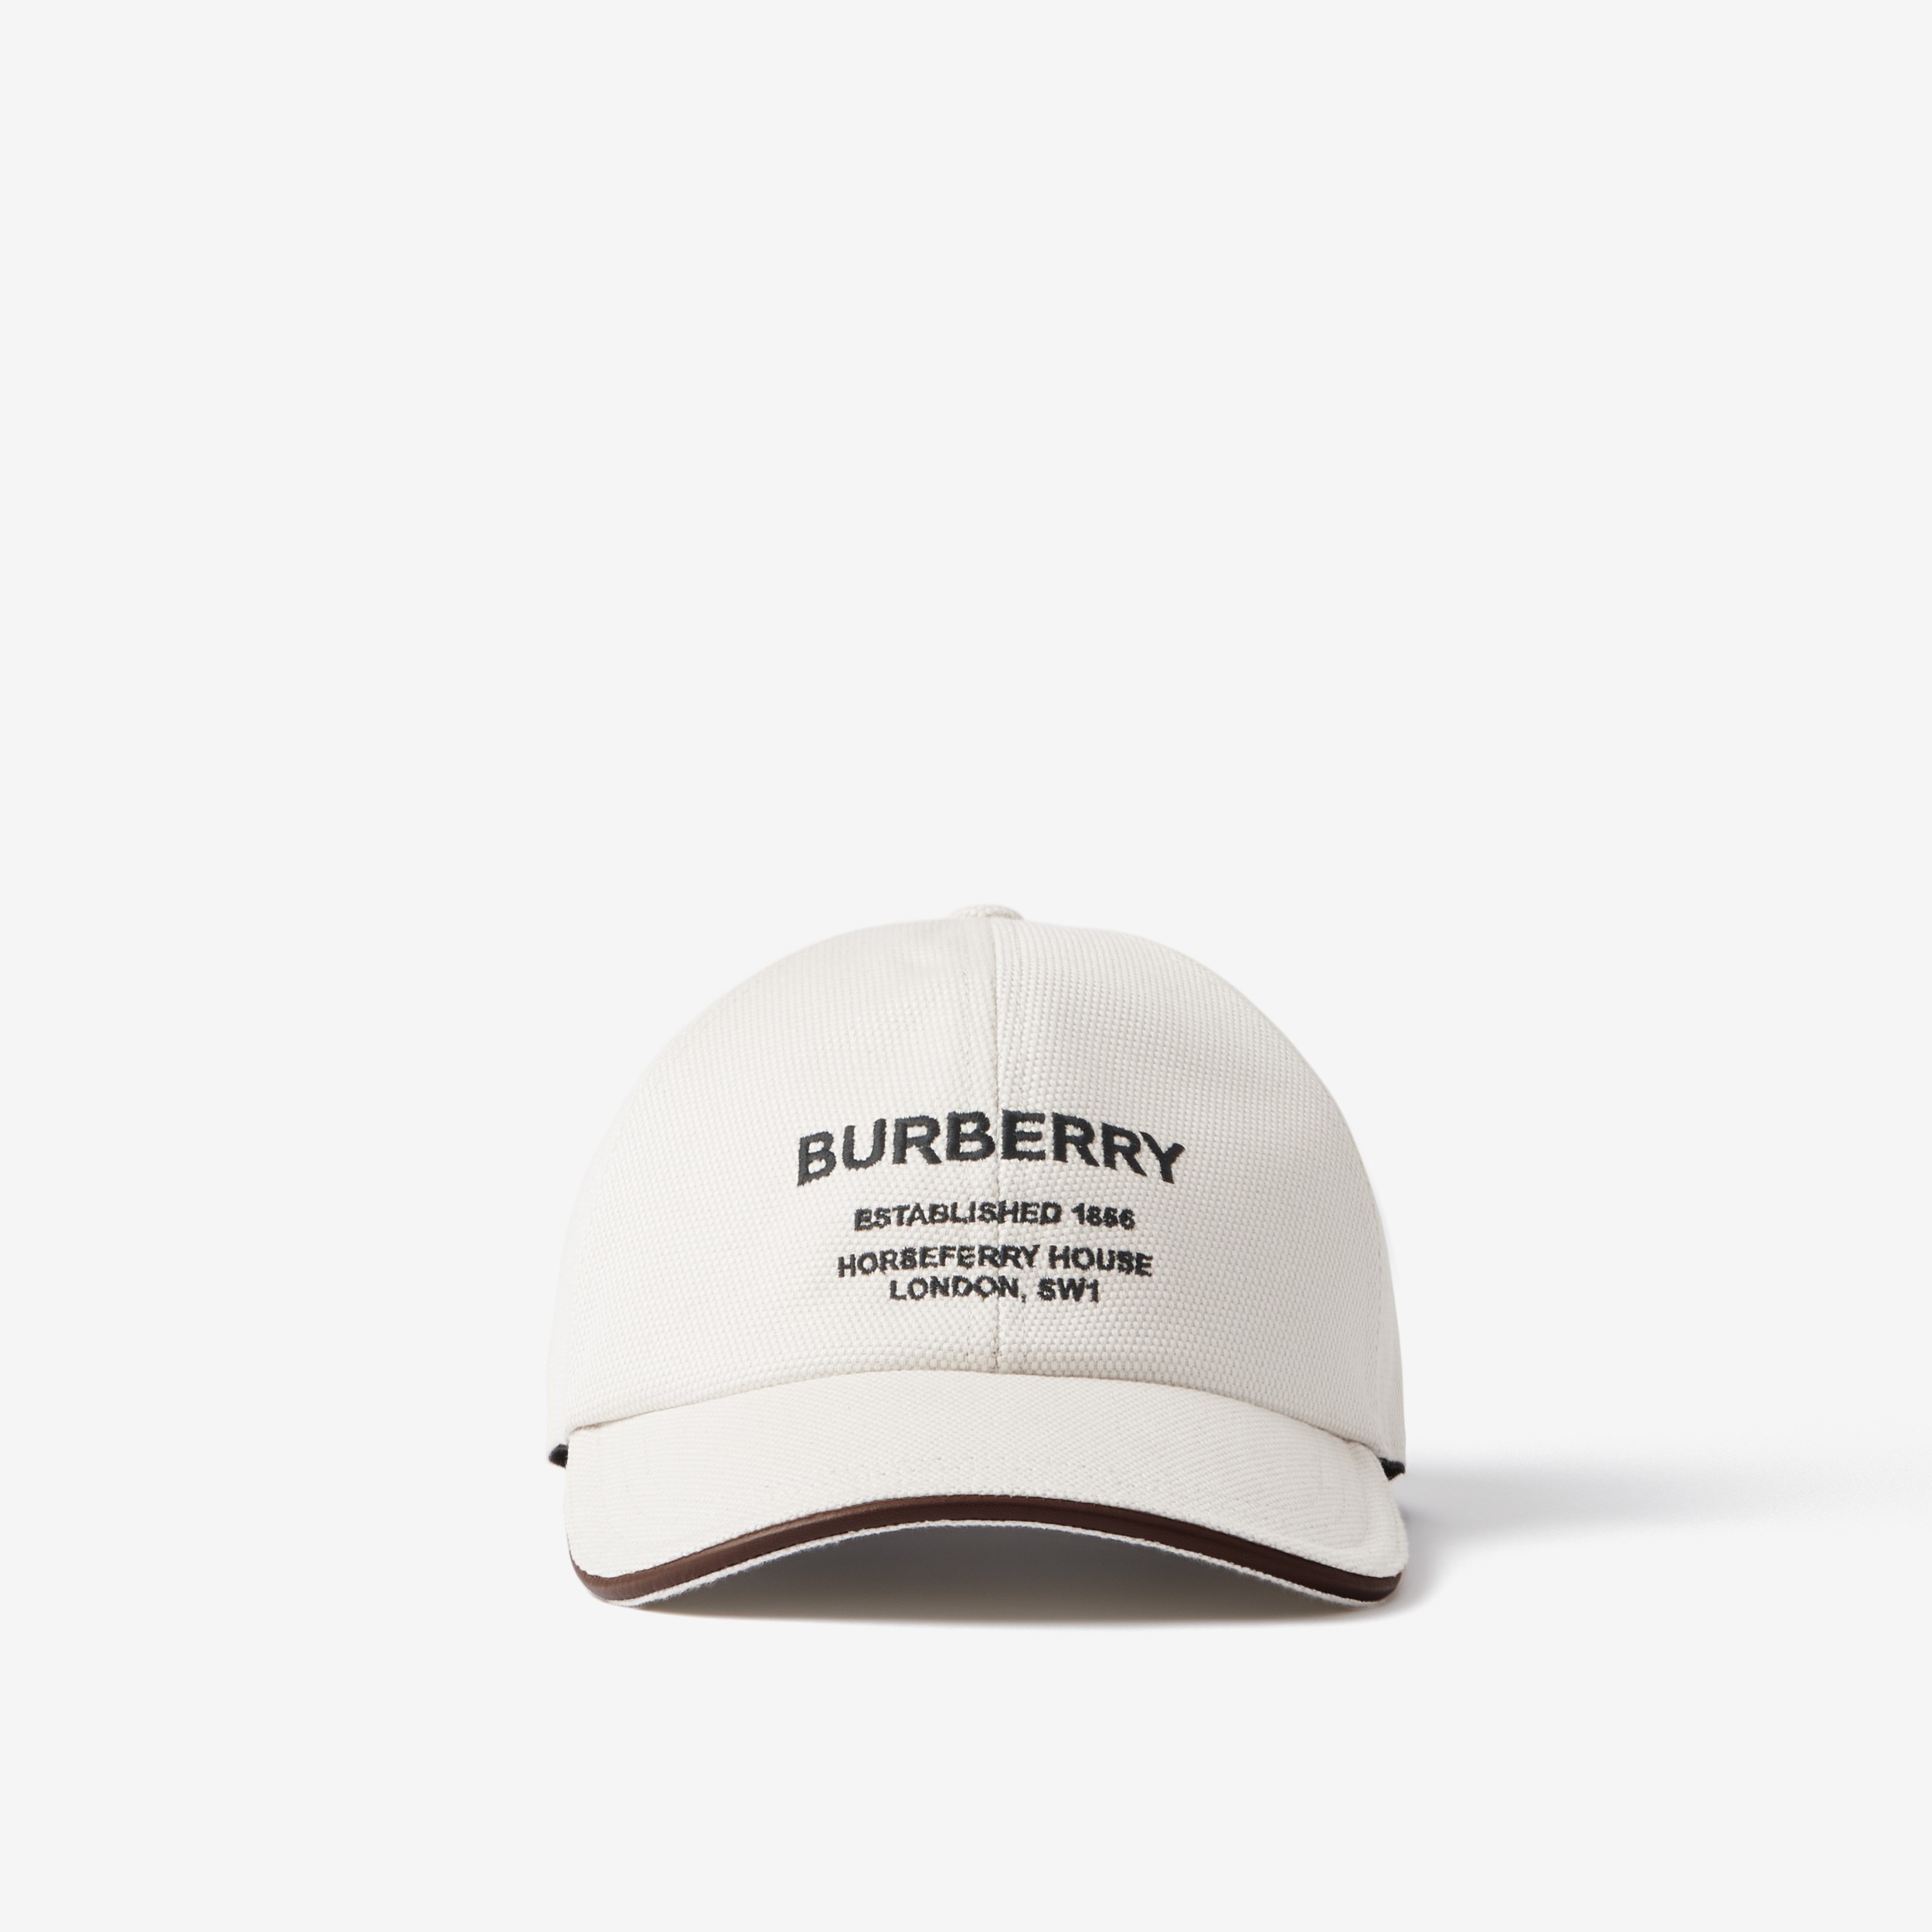 BURBERRY ホースフェリーモチーフ ベースボールキャップ-